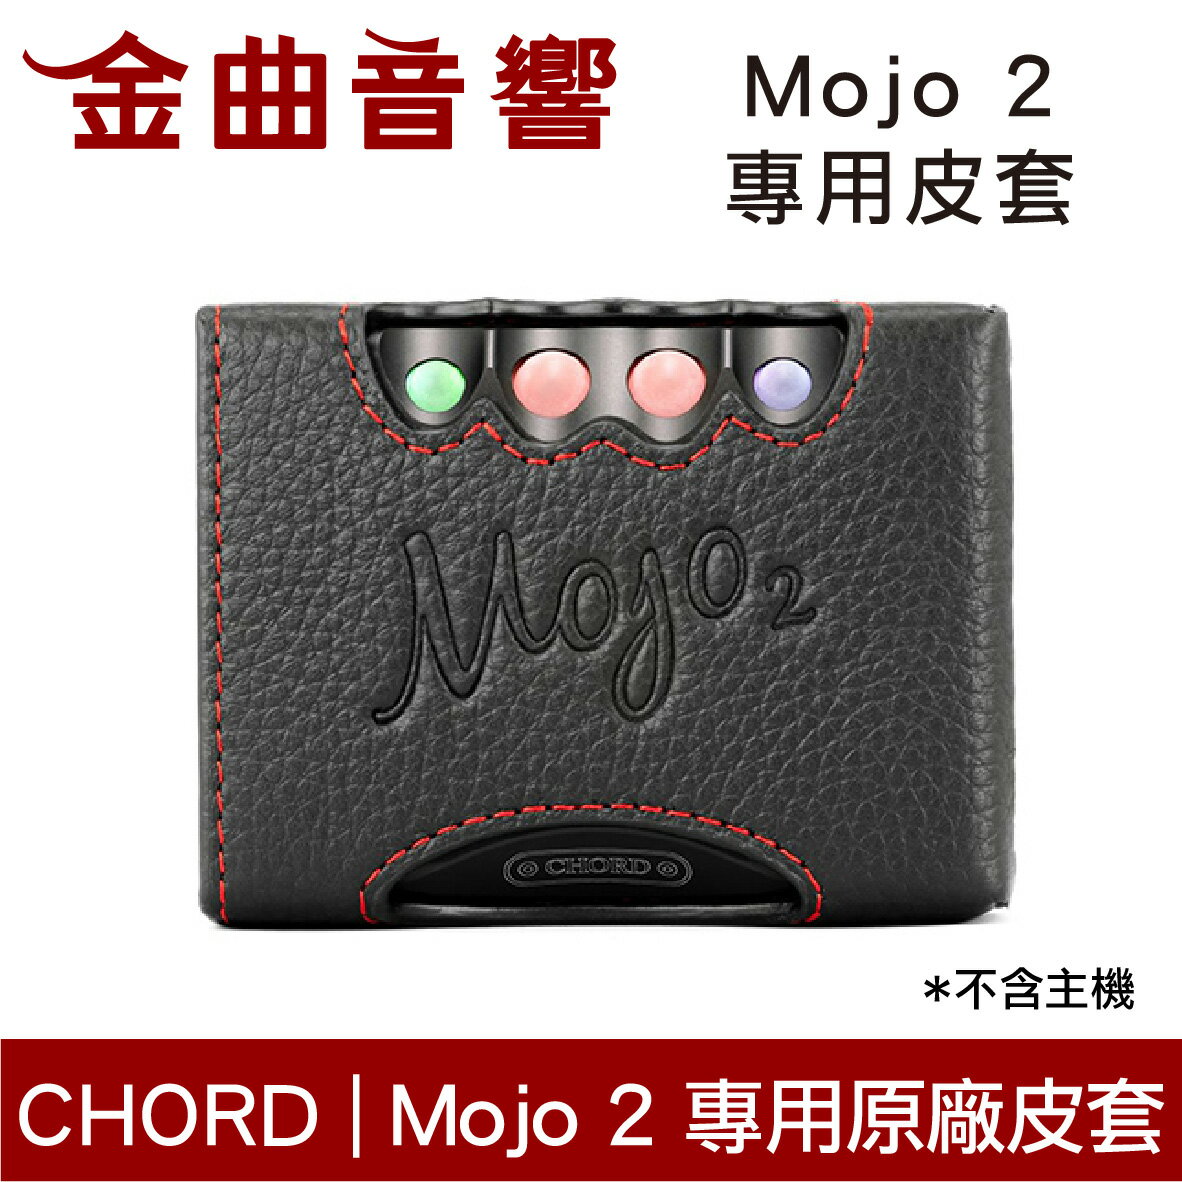 Chord Mojo 2 二代 原廠 專用保護皮套 高級 保護套 | 金曲音響